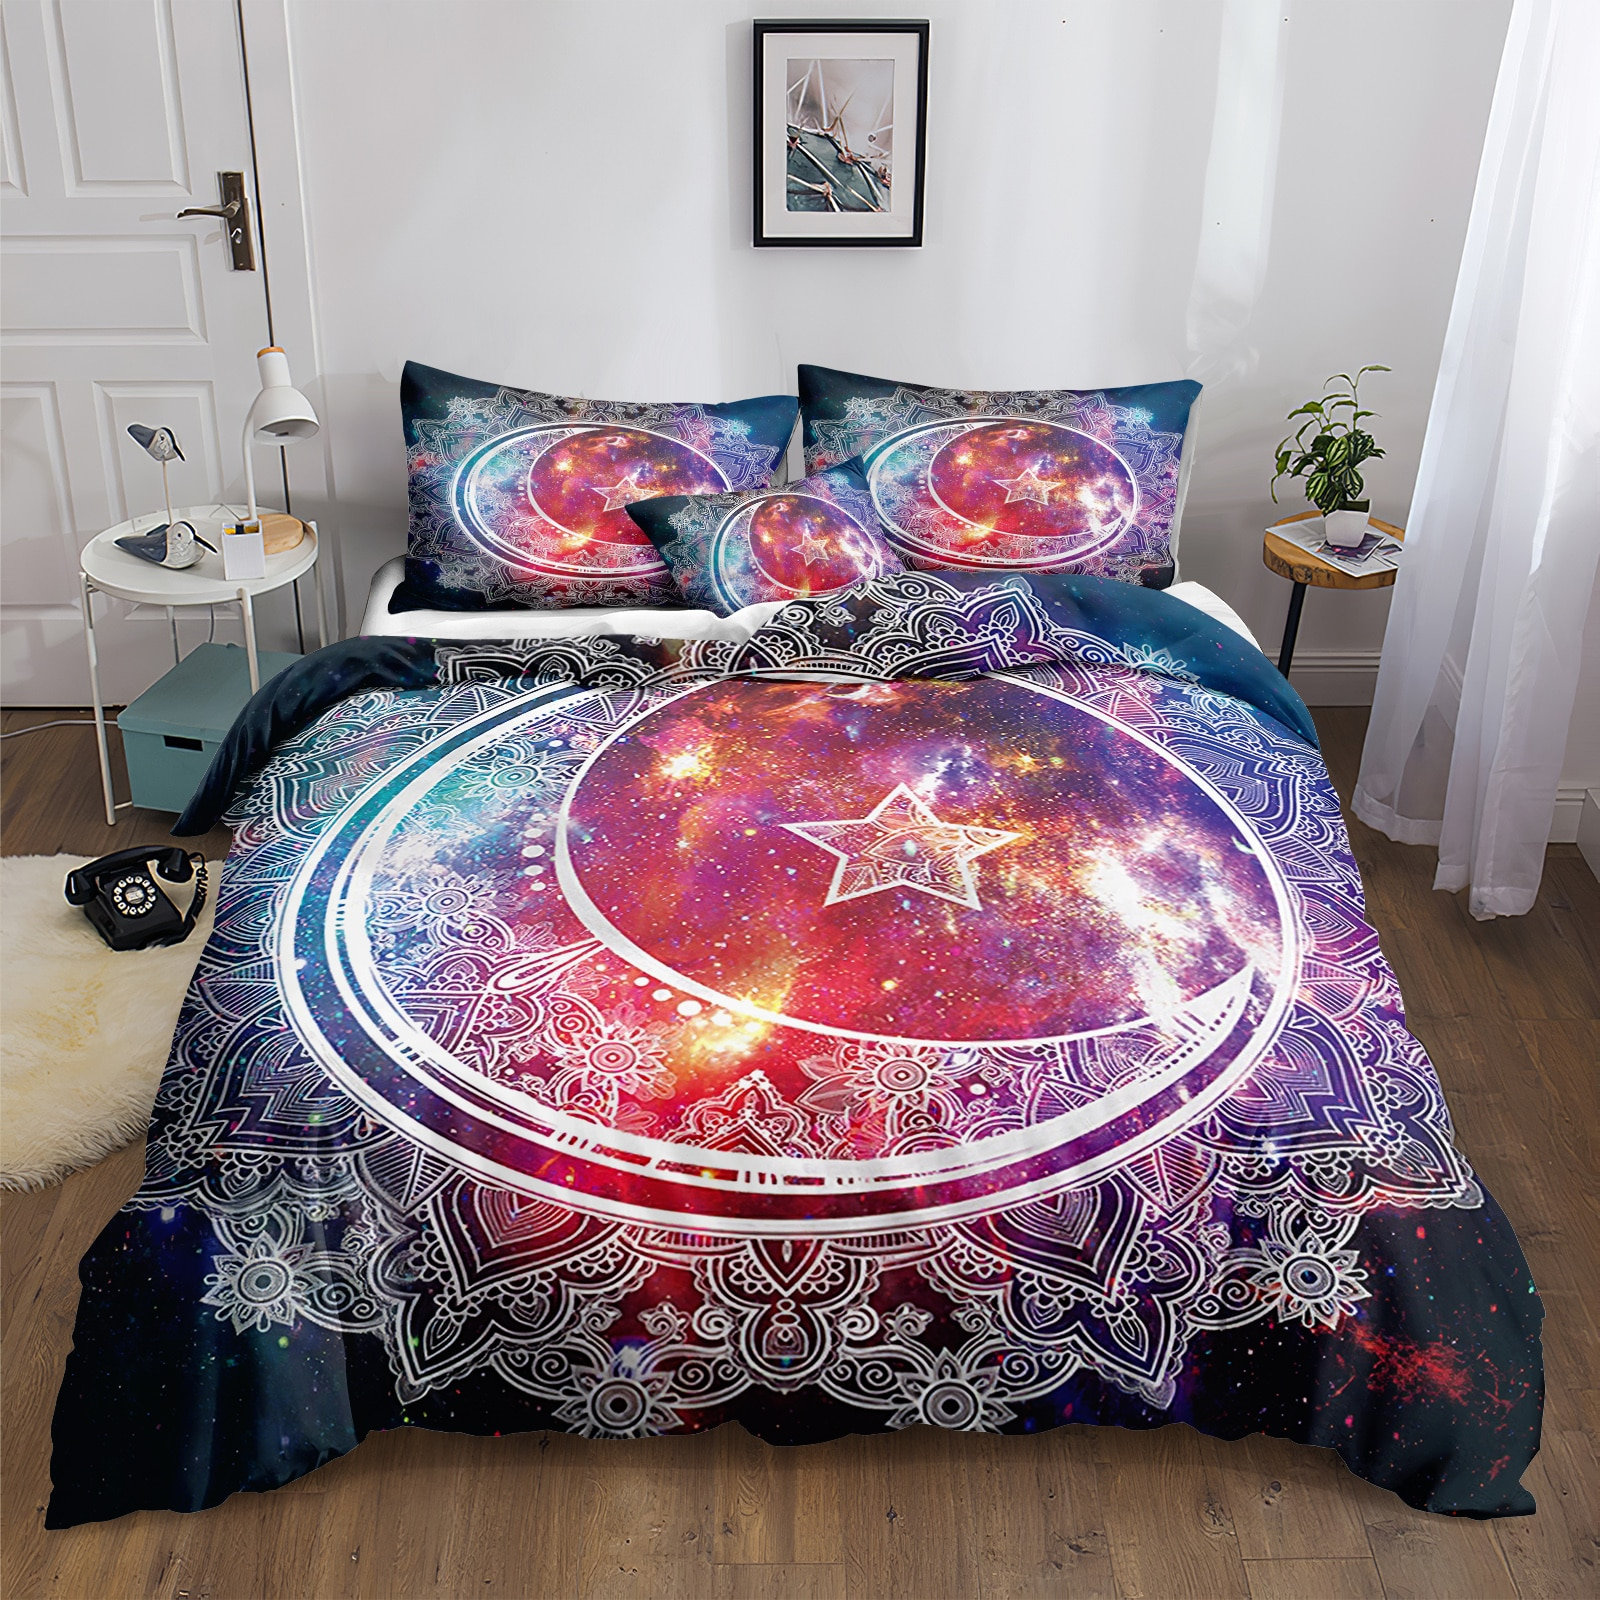 Boho Mandala Moon Star Bedding Set - Dreamy and Chic Home Decor